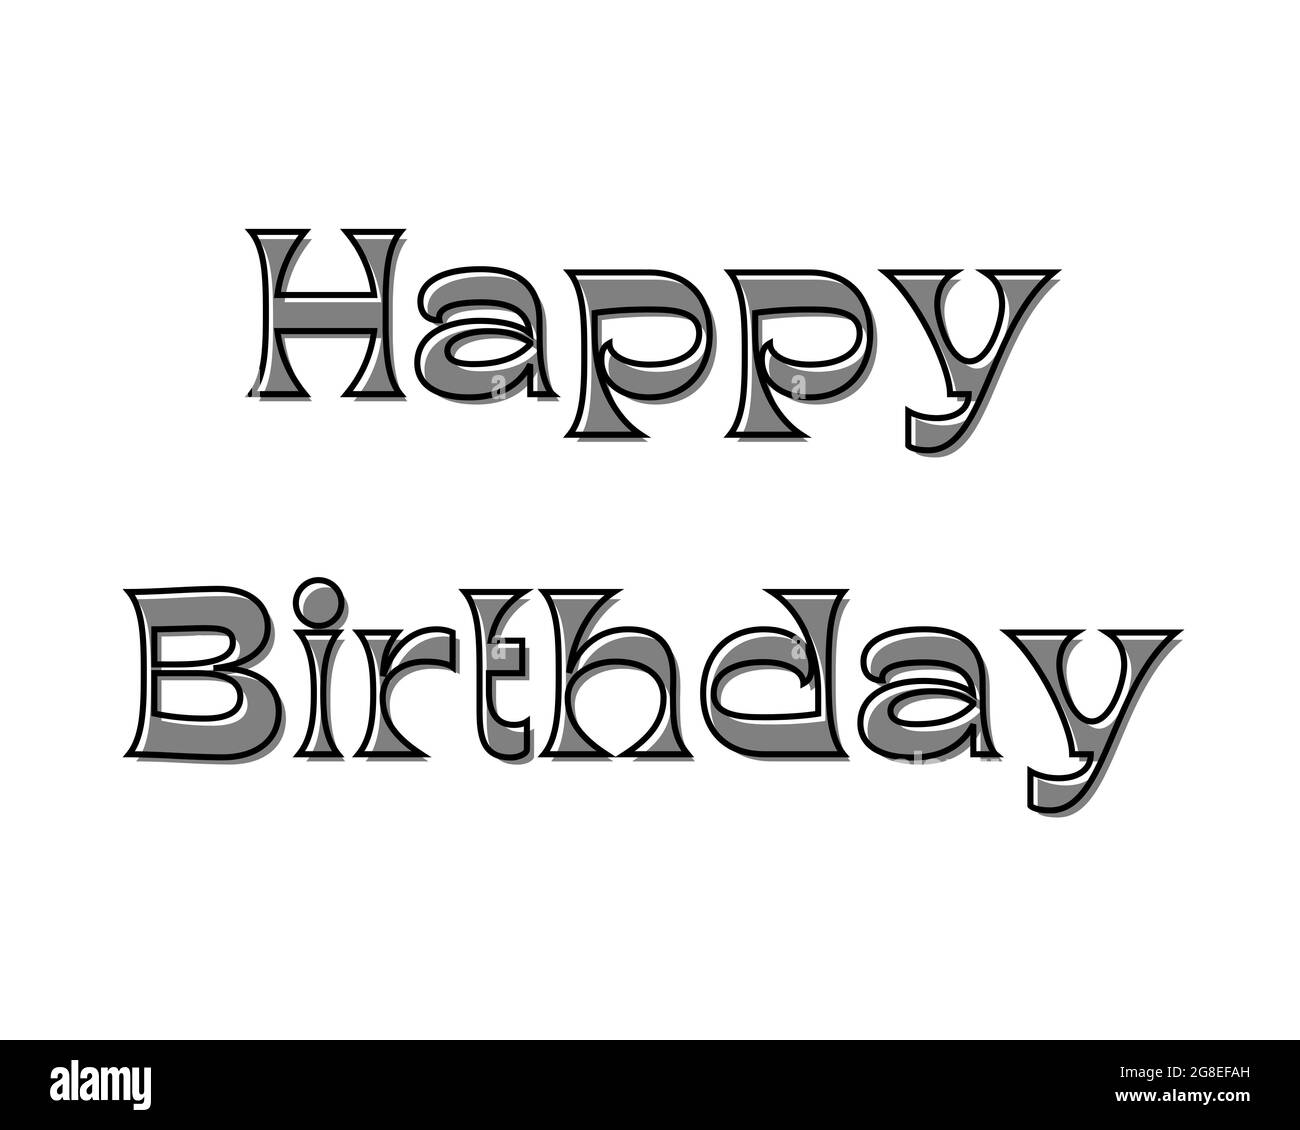 Happy birthday text art Stock Photo